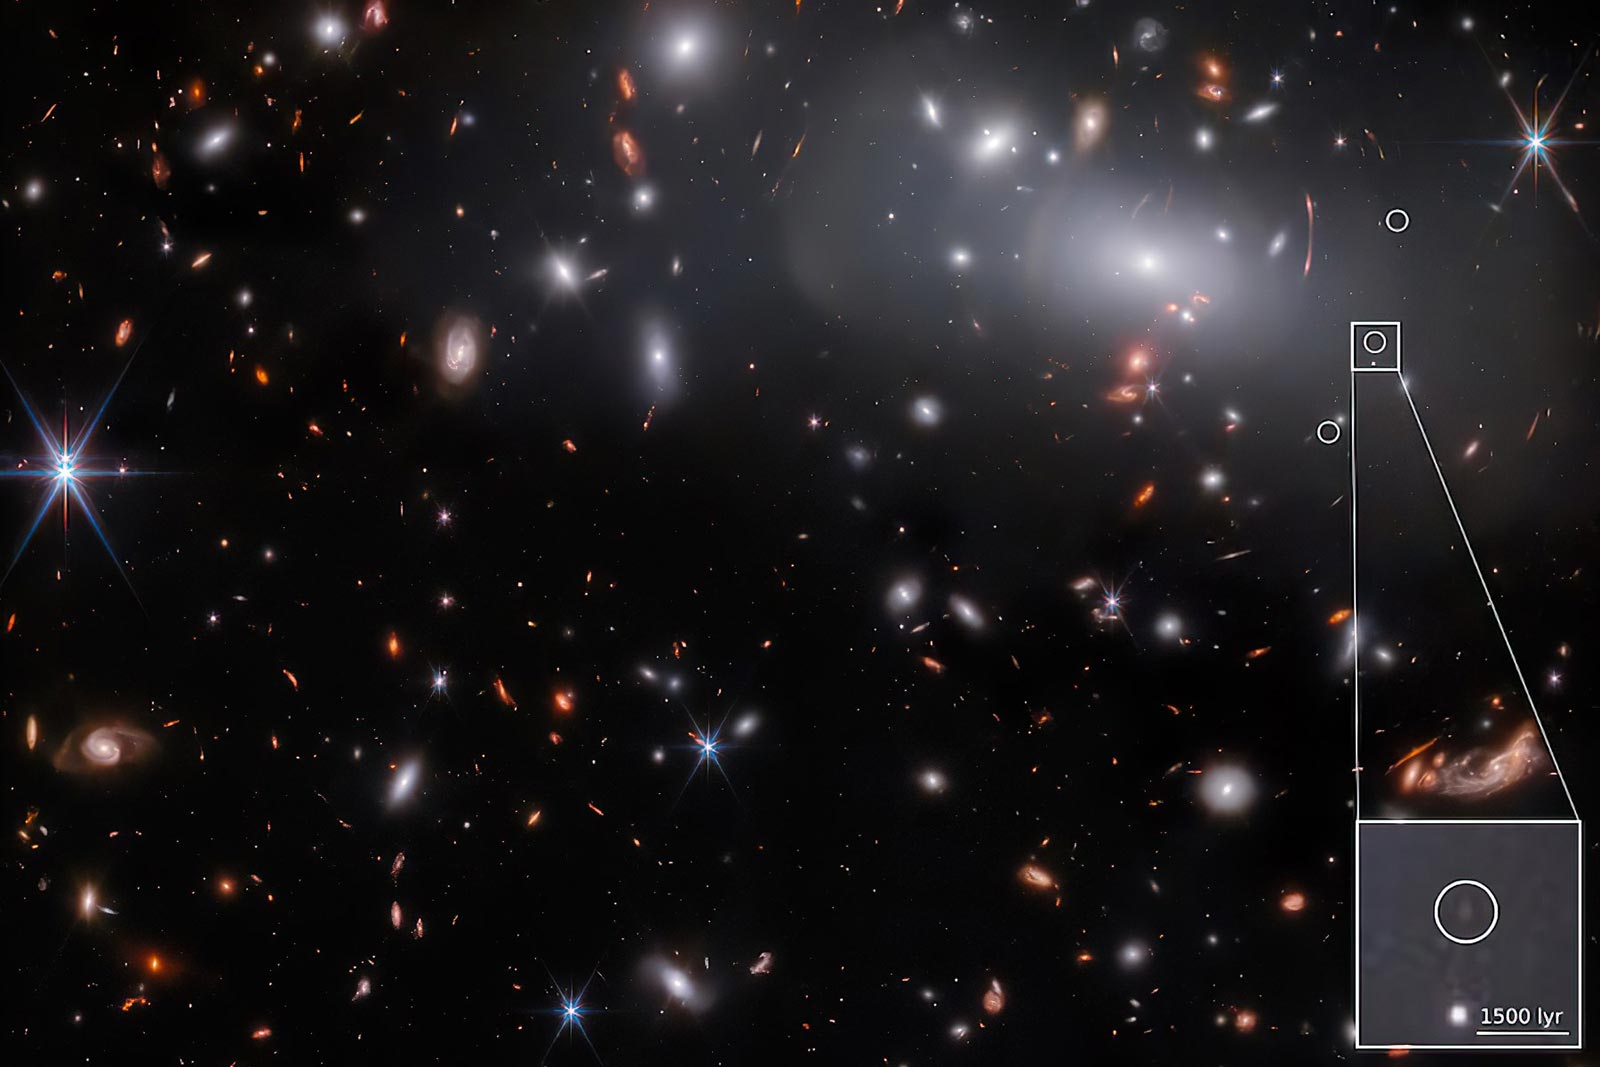 majhna galaksija, stara 13 milijard let